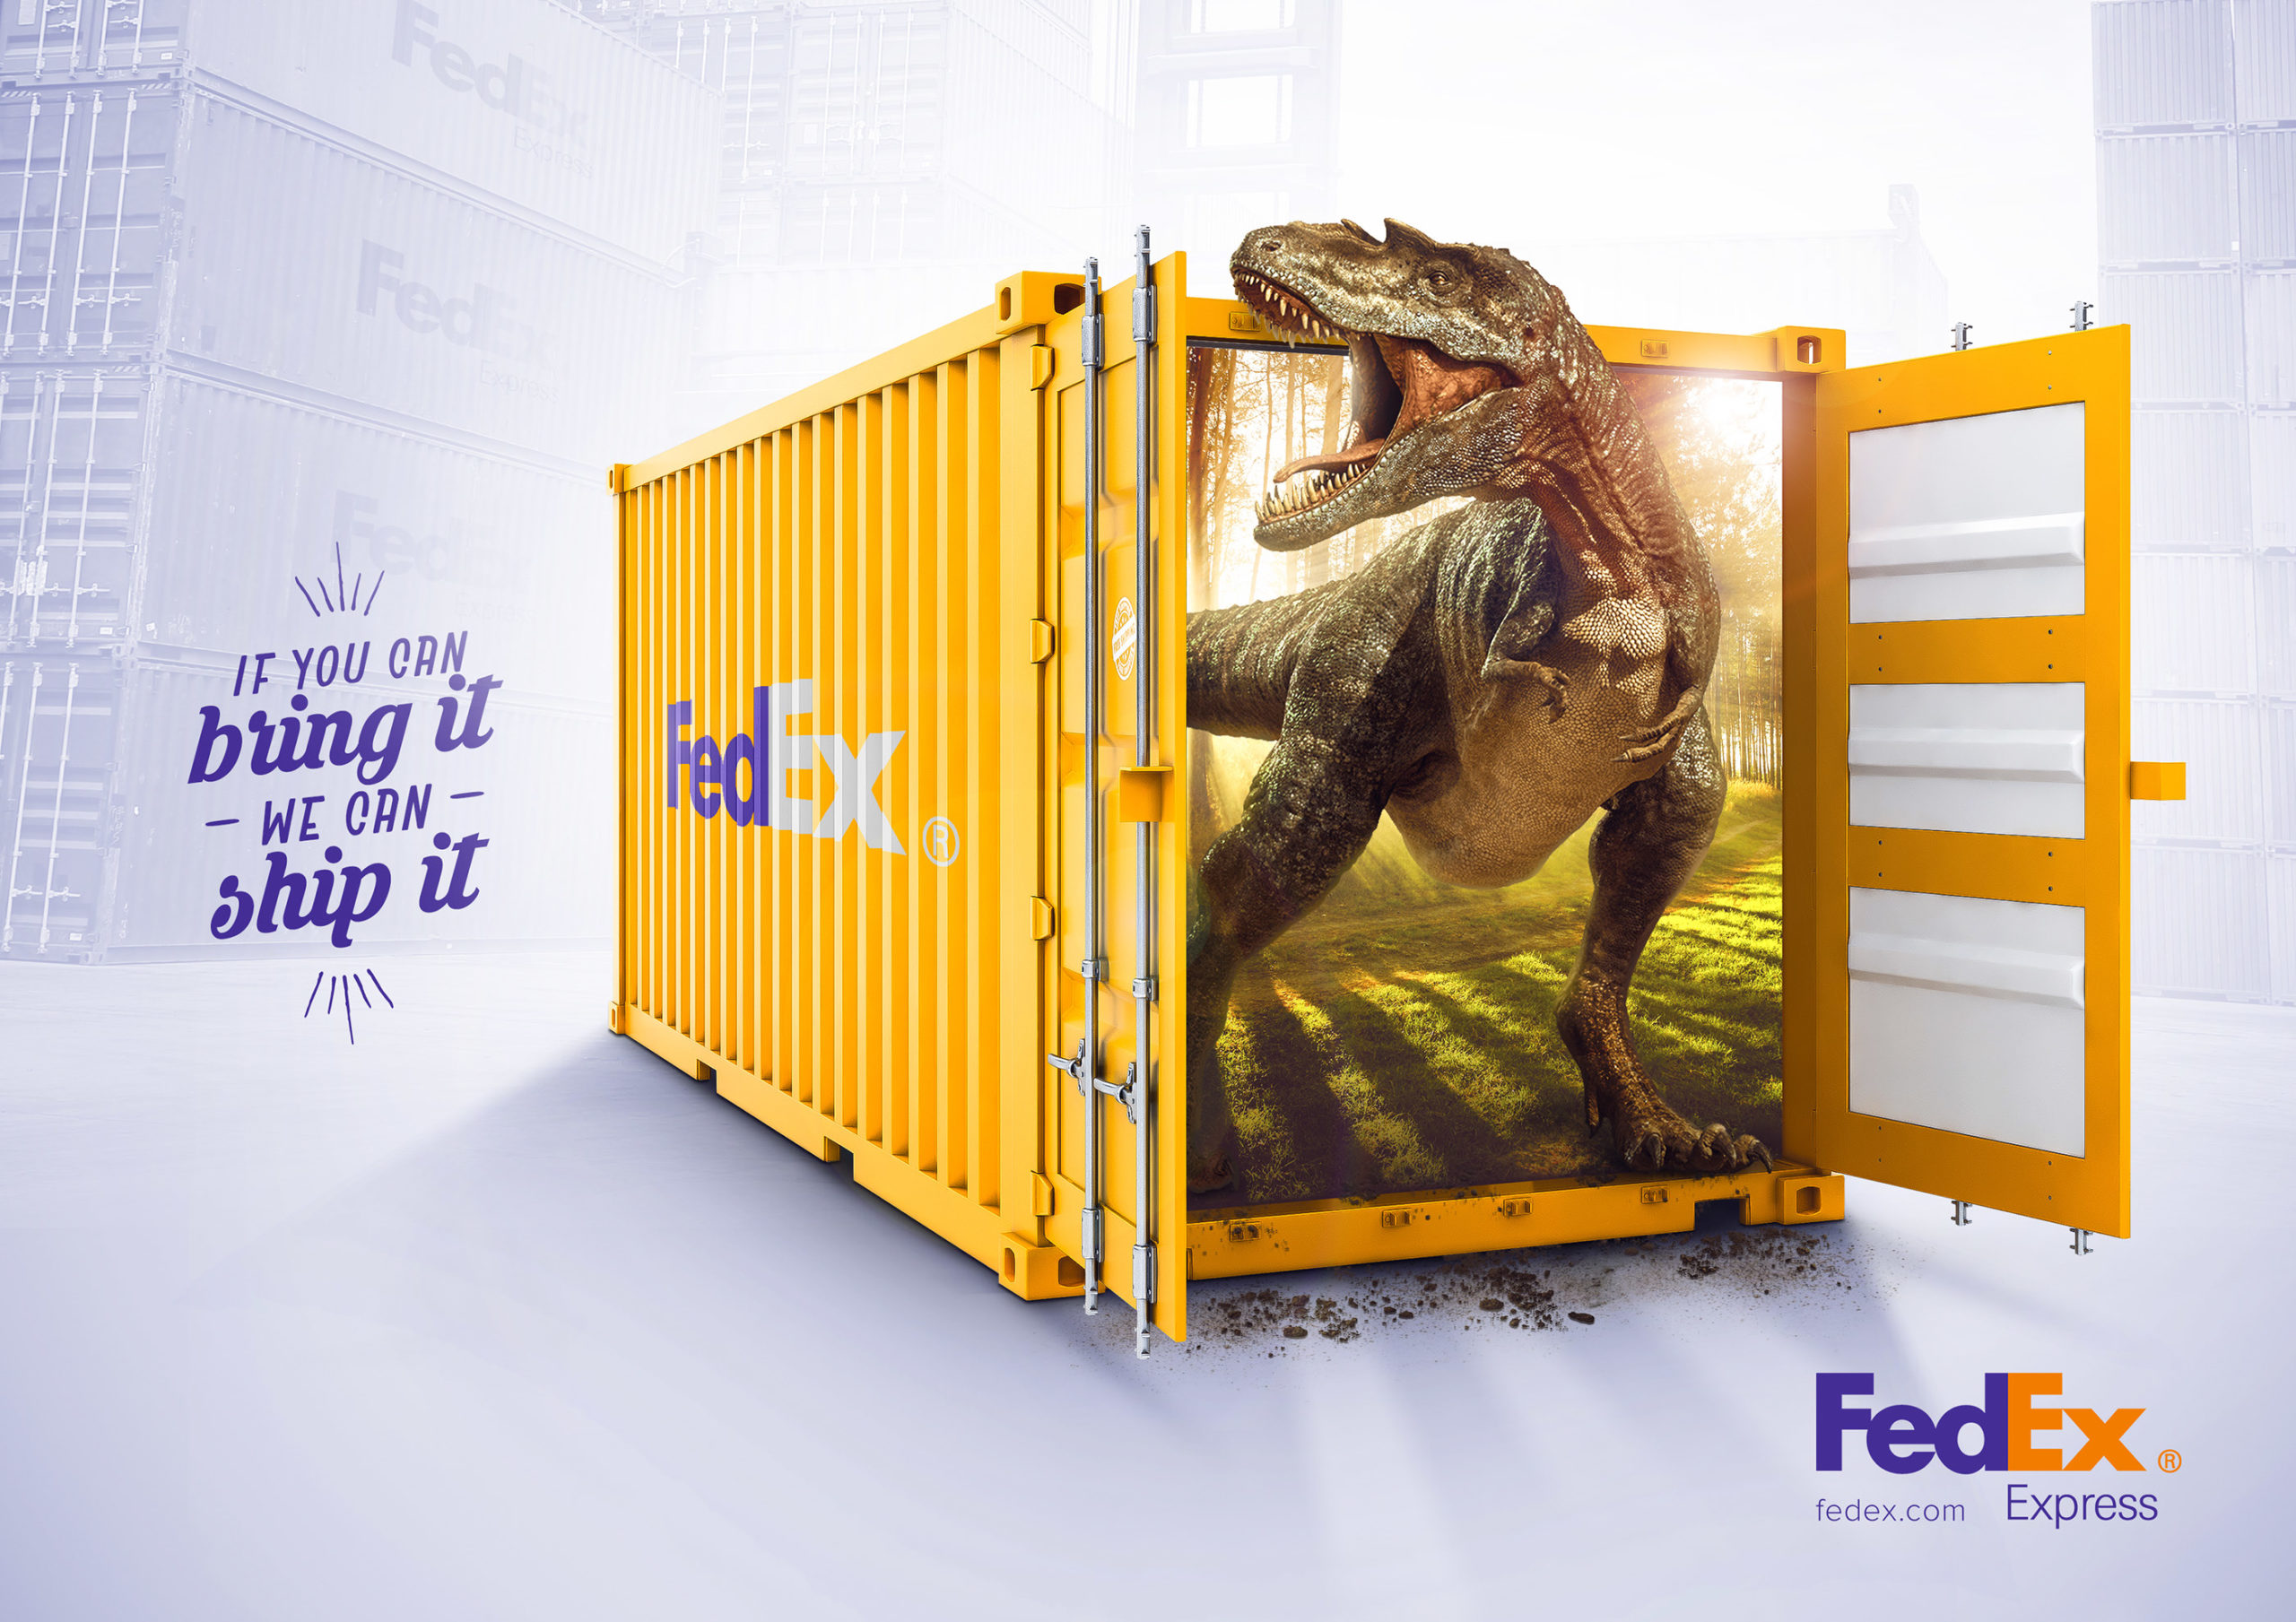 FedEx Hero archetype campaign3 scaled